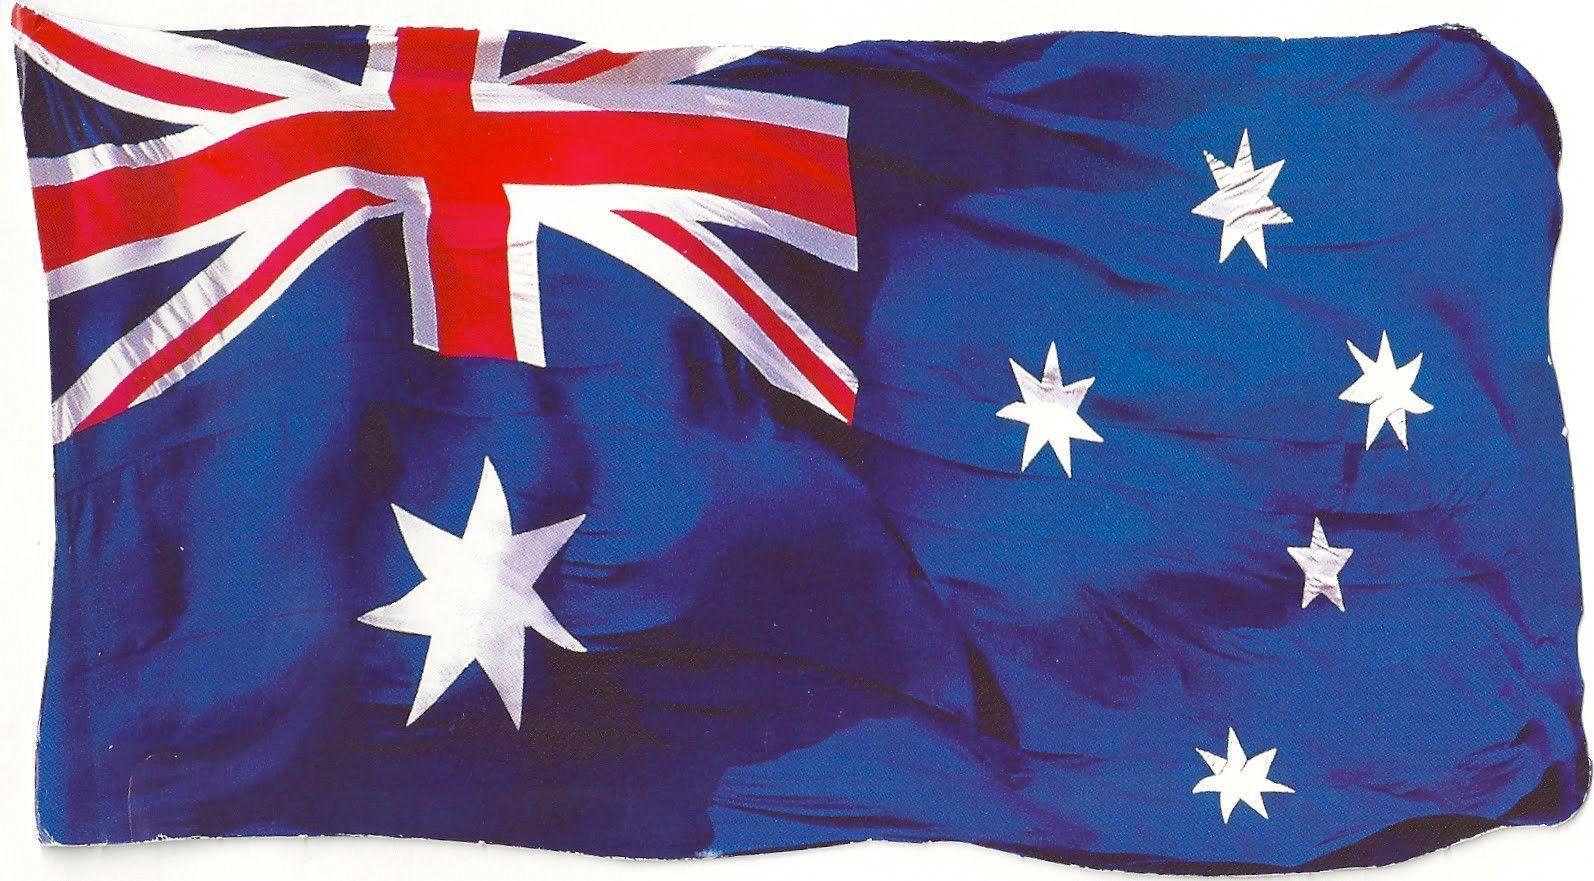 Australia Flag Wallpaper Free Download